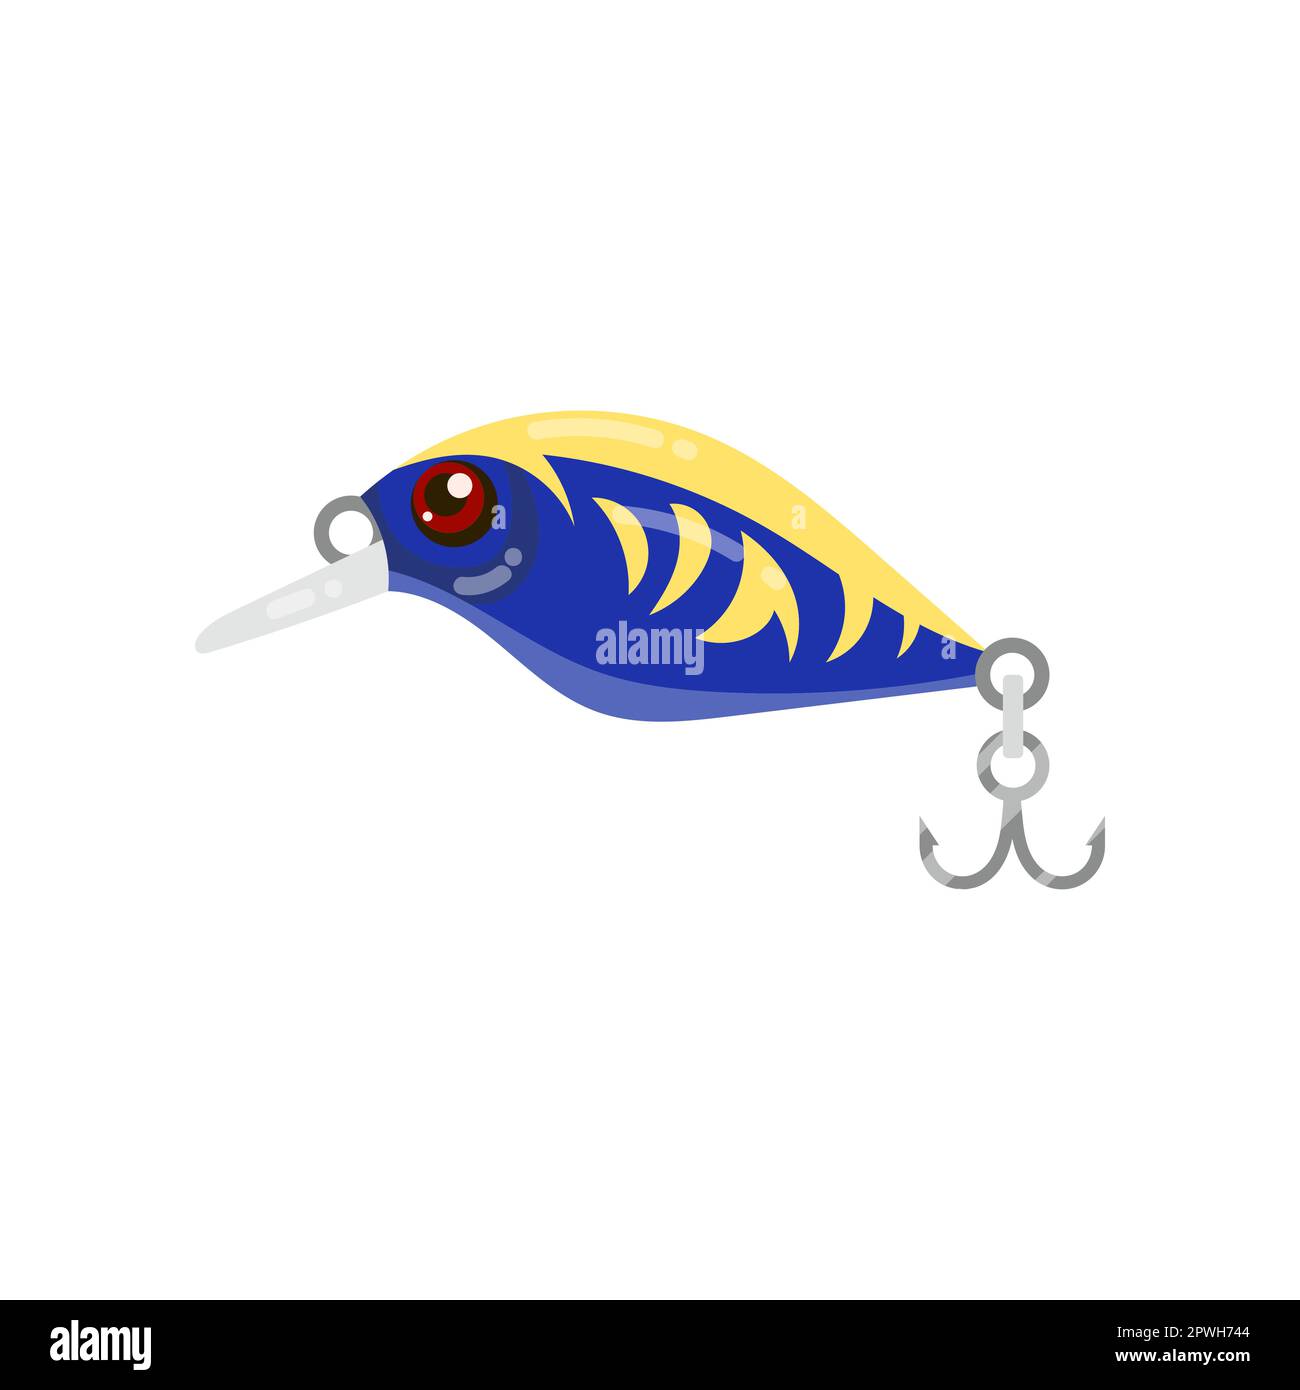 https://c8.alamy.com/comp/2PWH744/blue-fishing-bait-in-shape-of-fish-cartoon-illustration-2PWH744.jpg